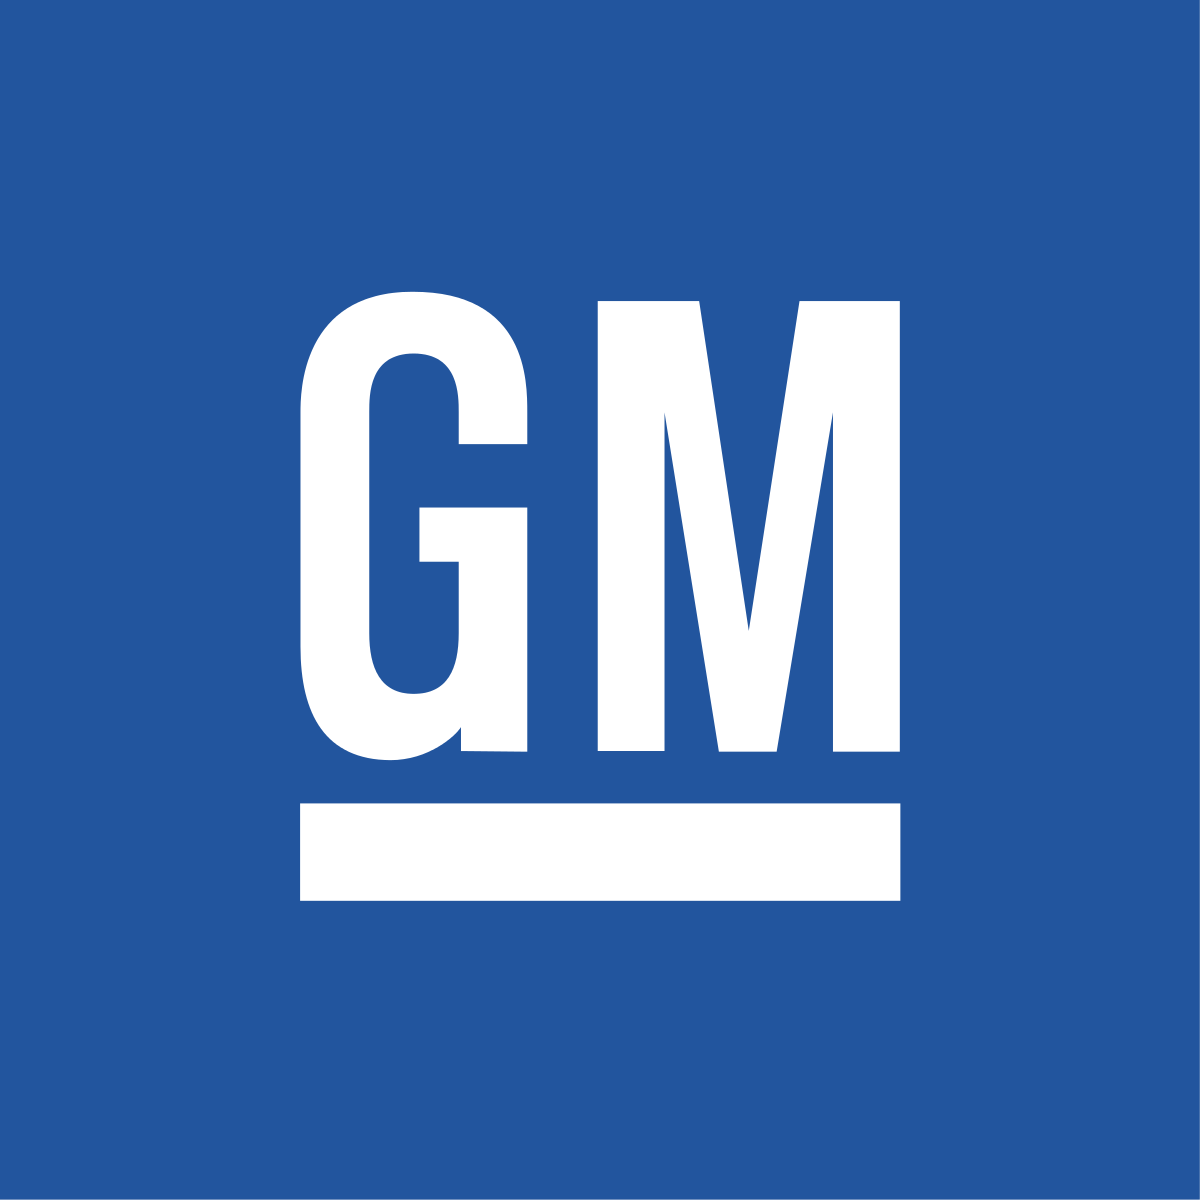 通用汽车(General Motors)